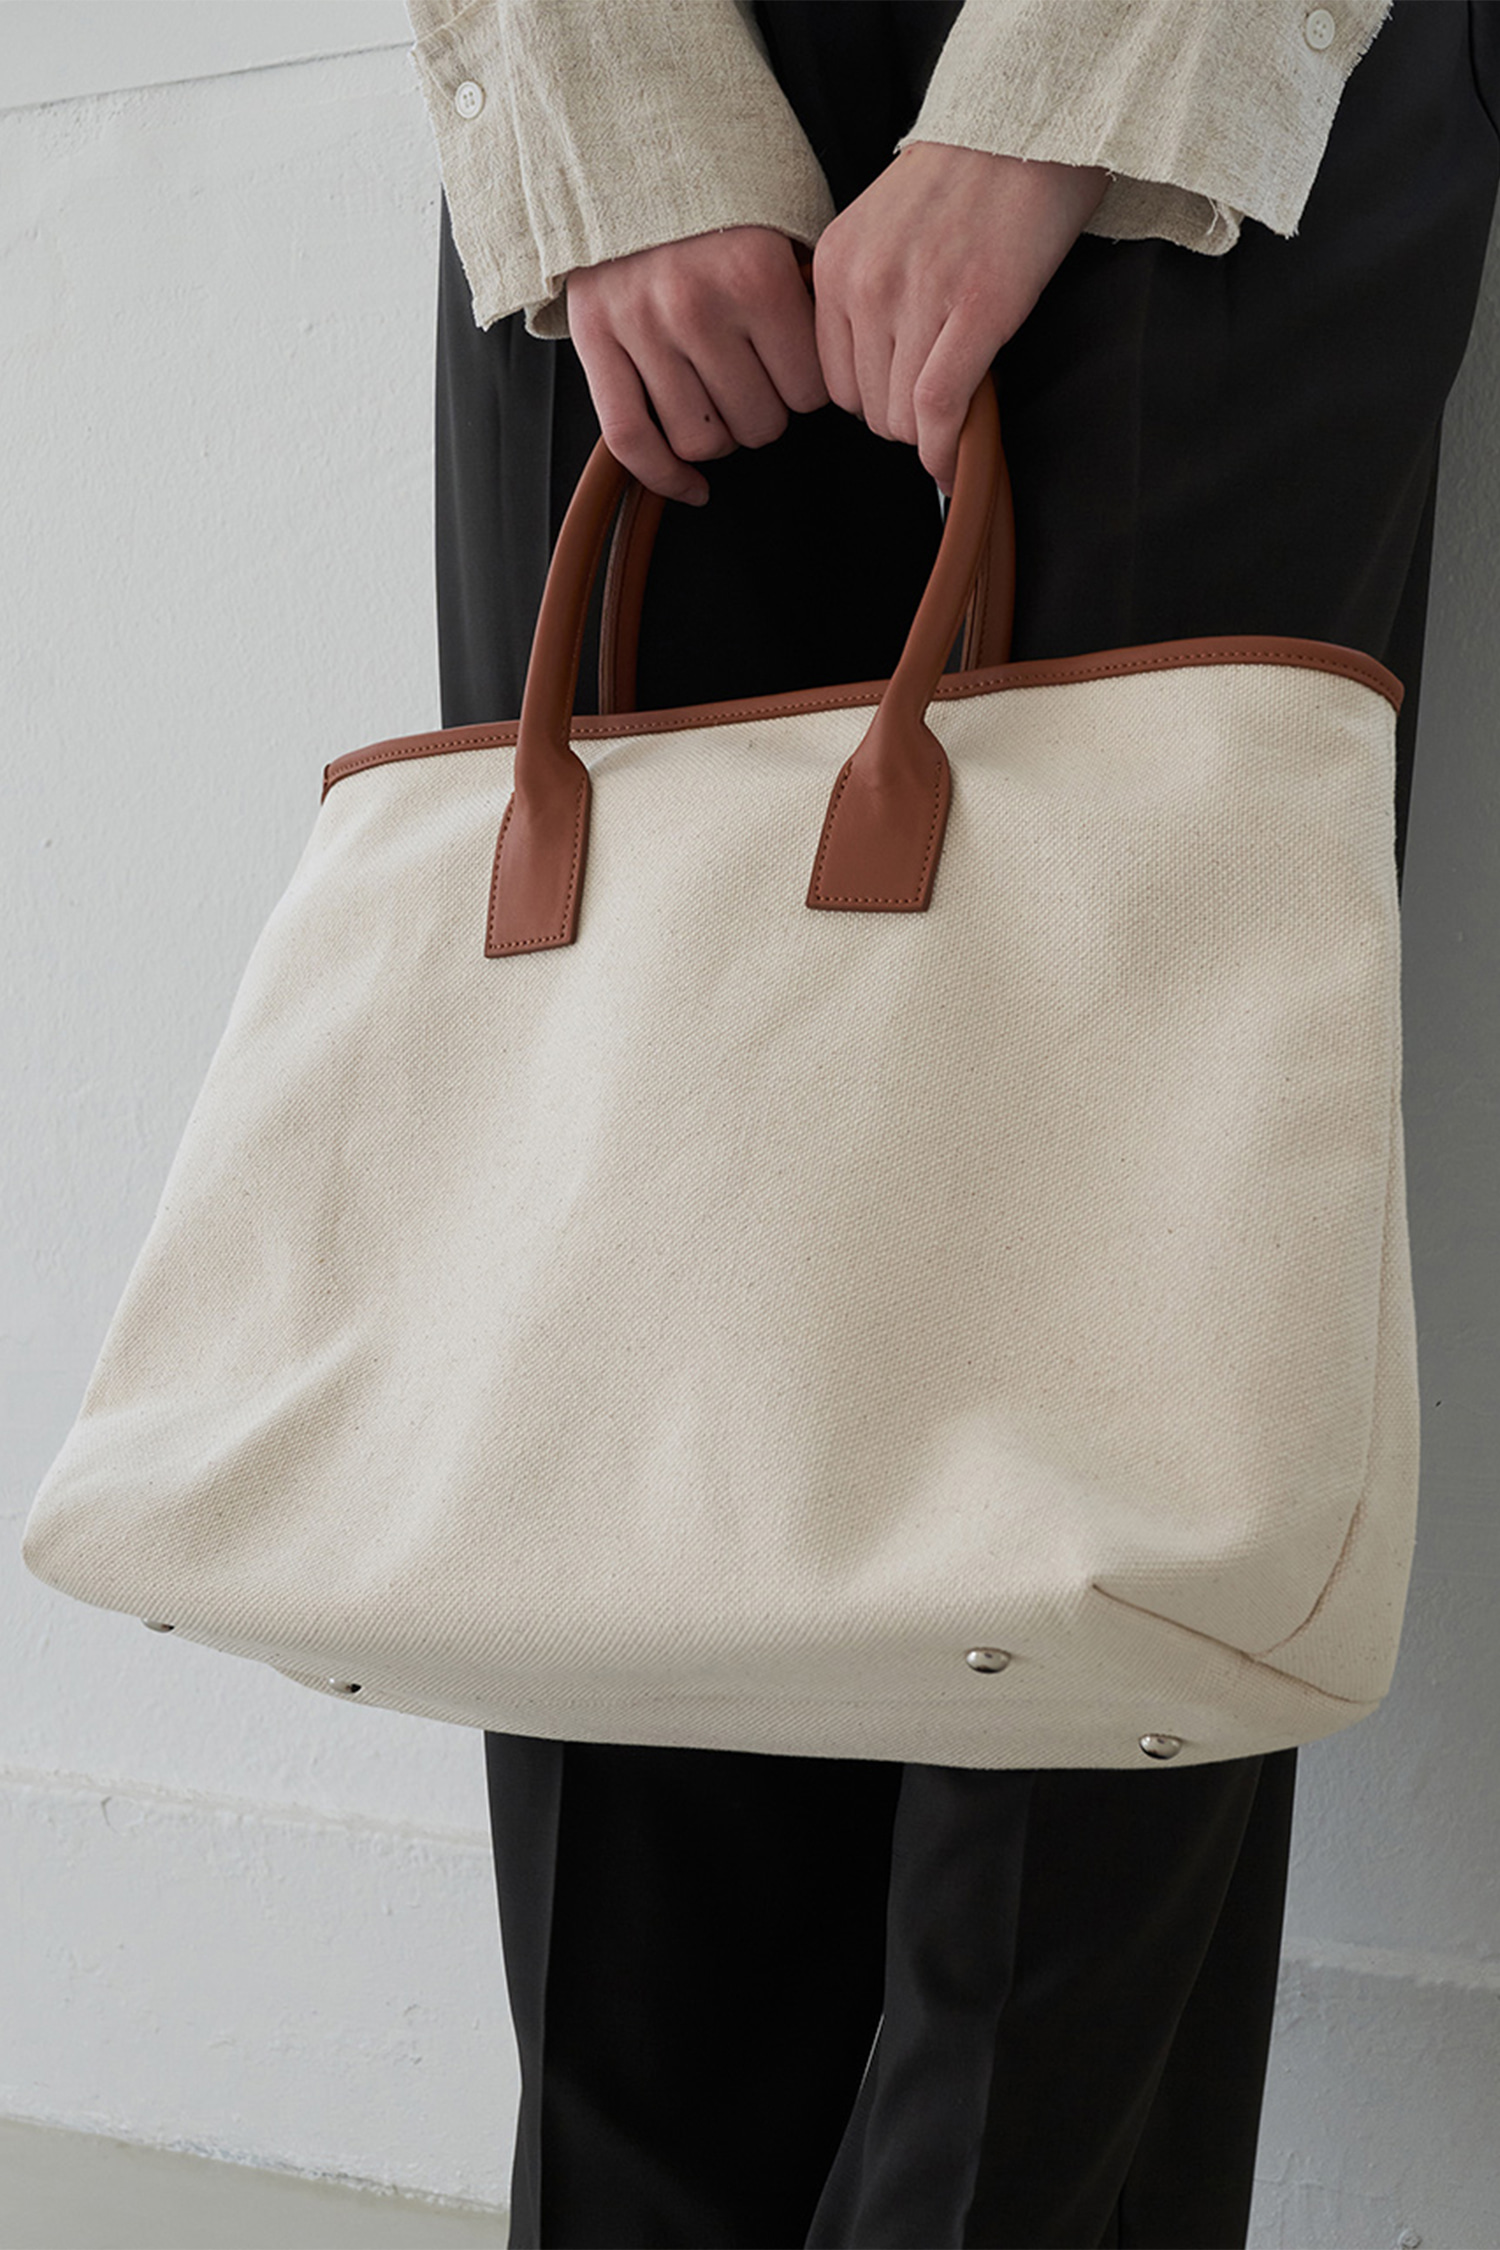 Easy canvas tote bag - brown